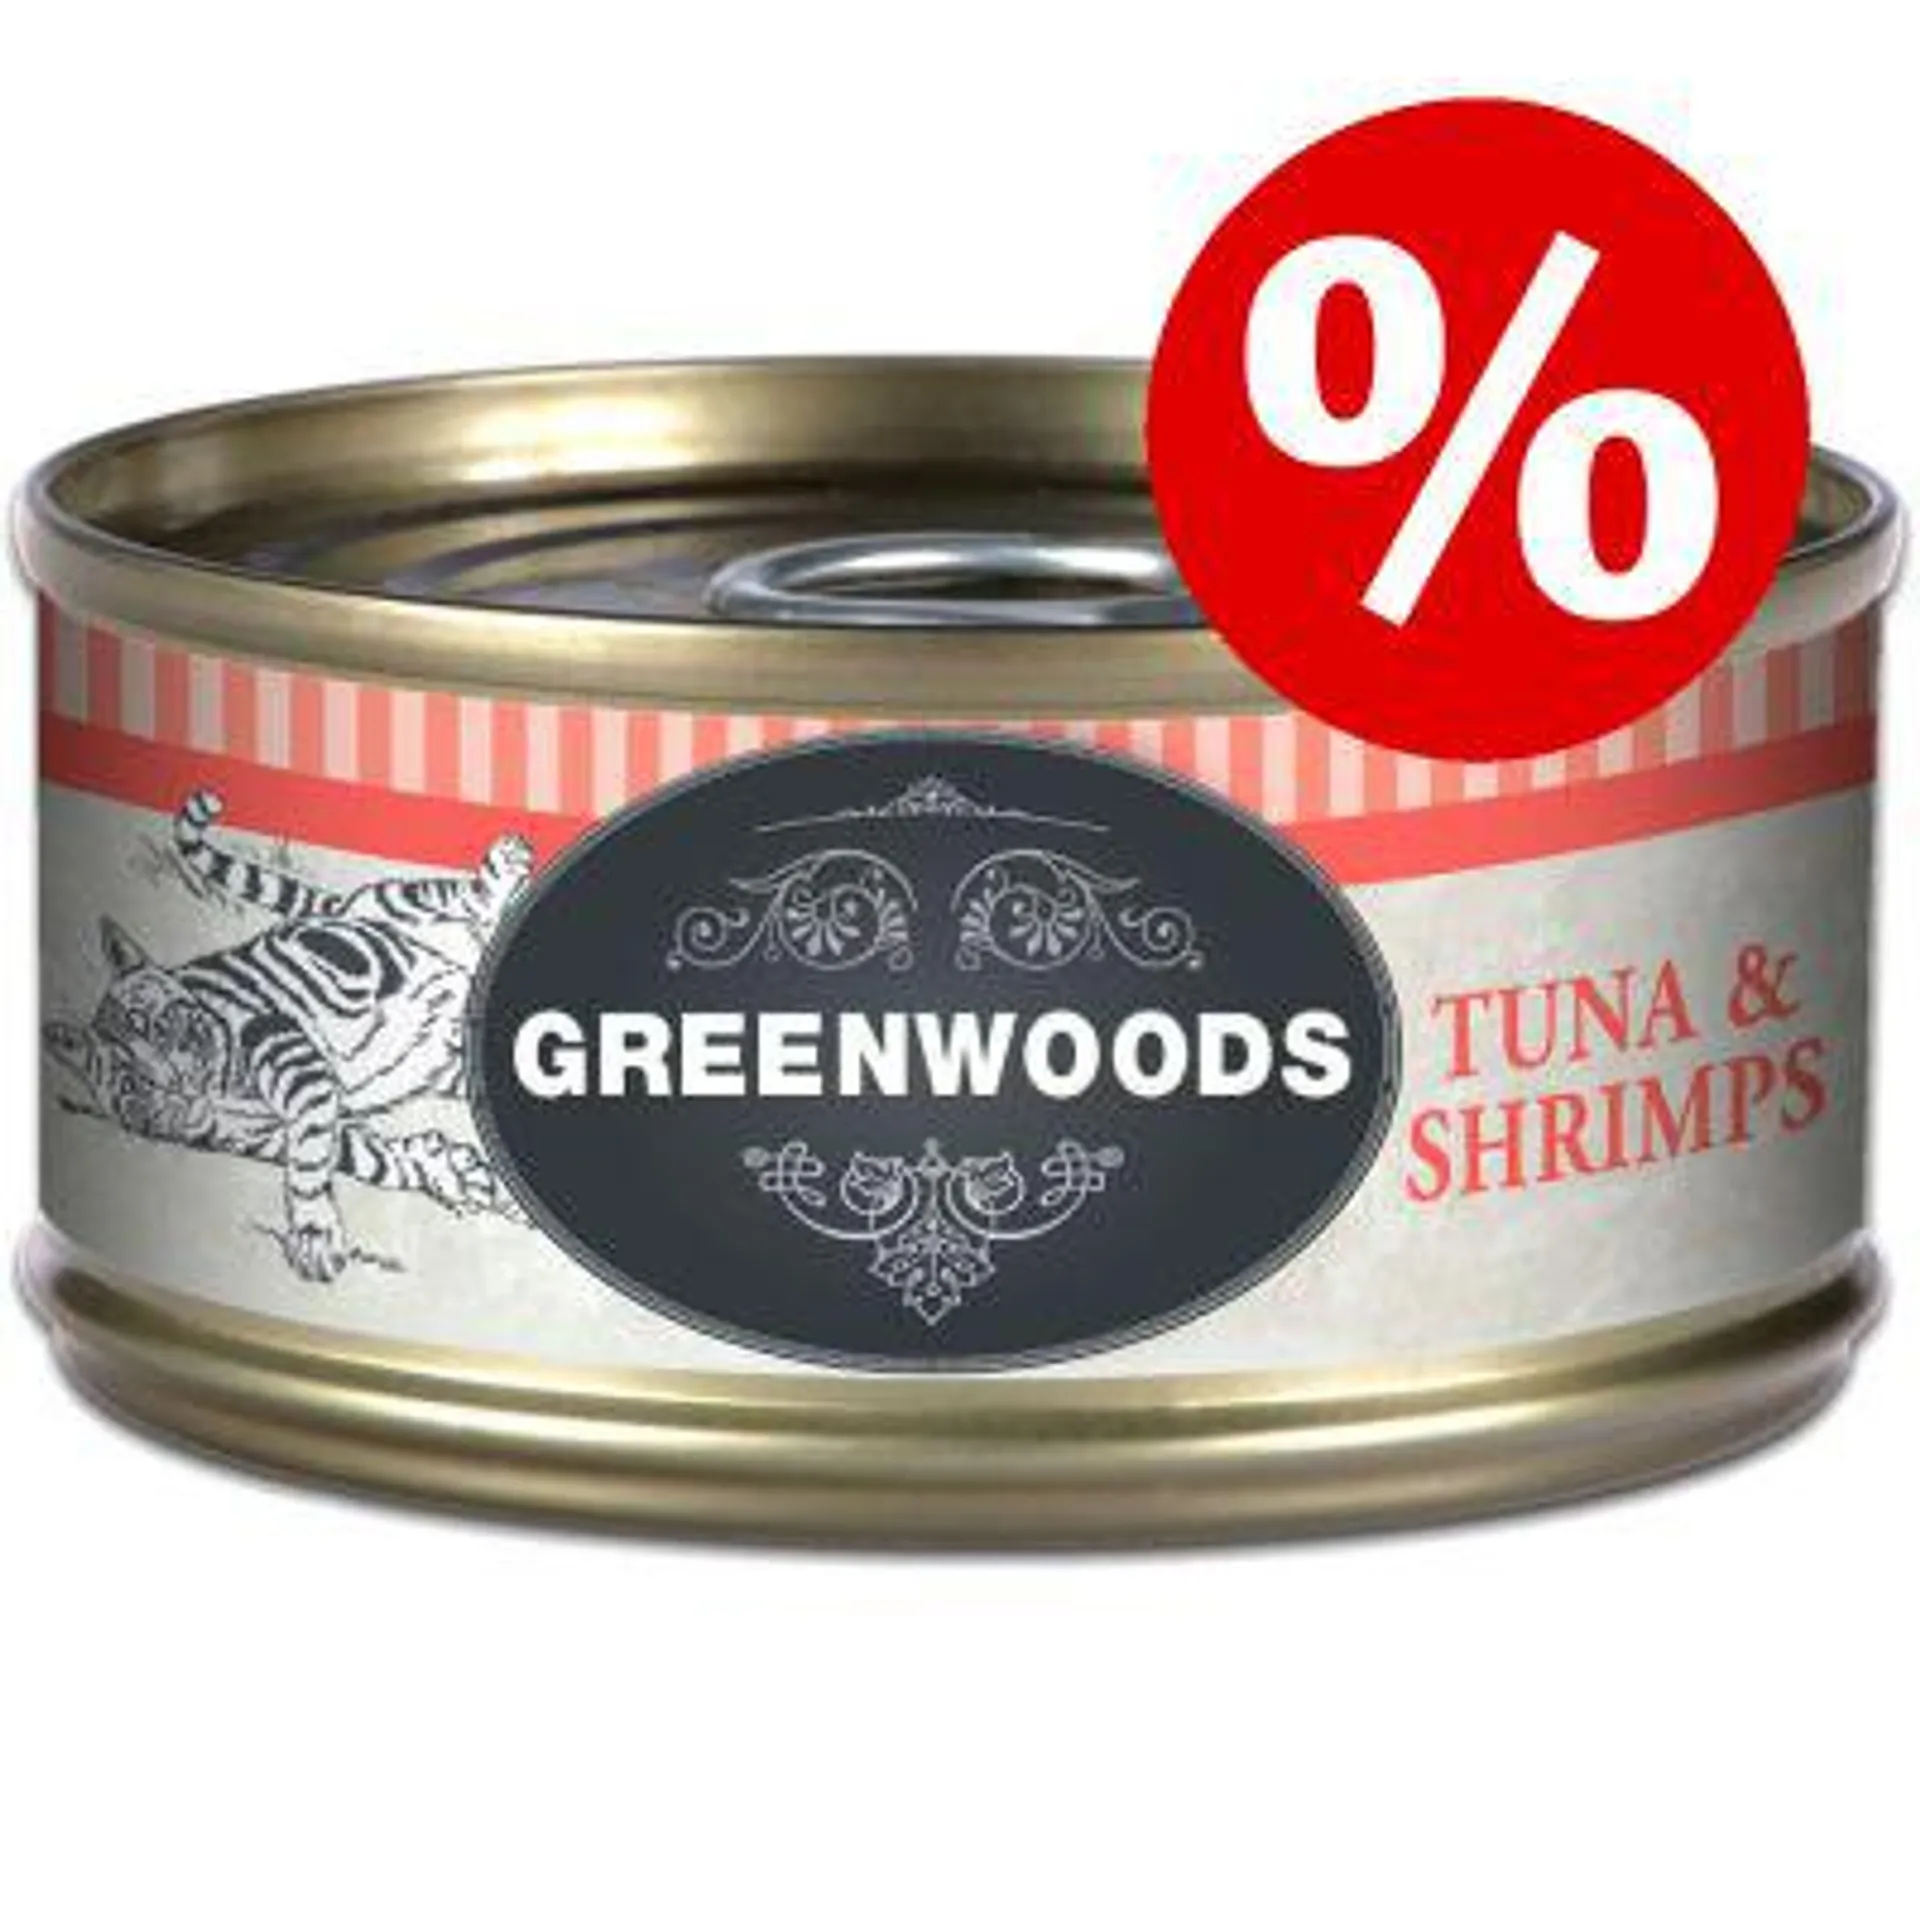 24 x 70g Greenwoods Adult Wet Cat Food - Special Price!*